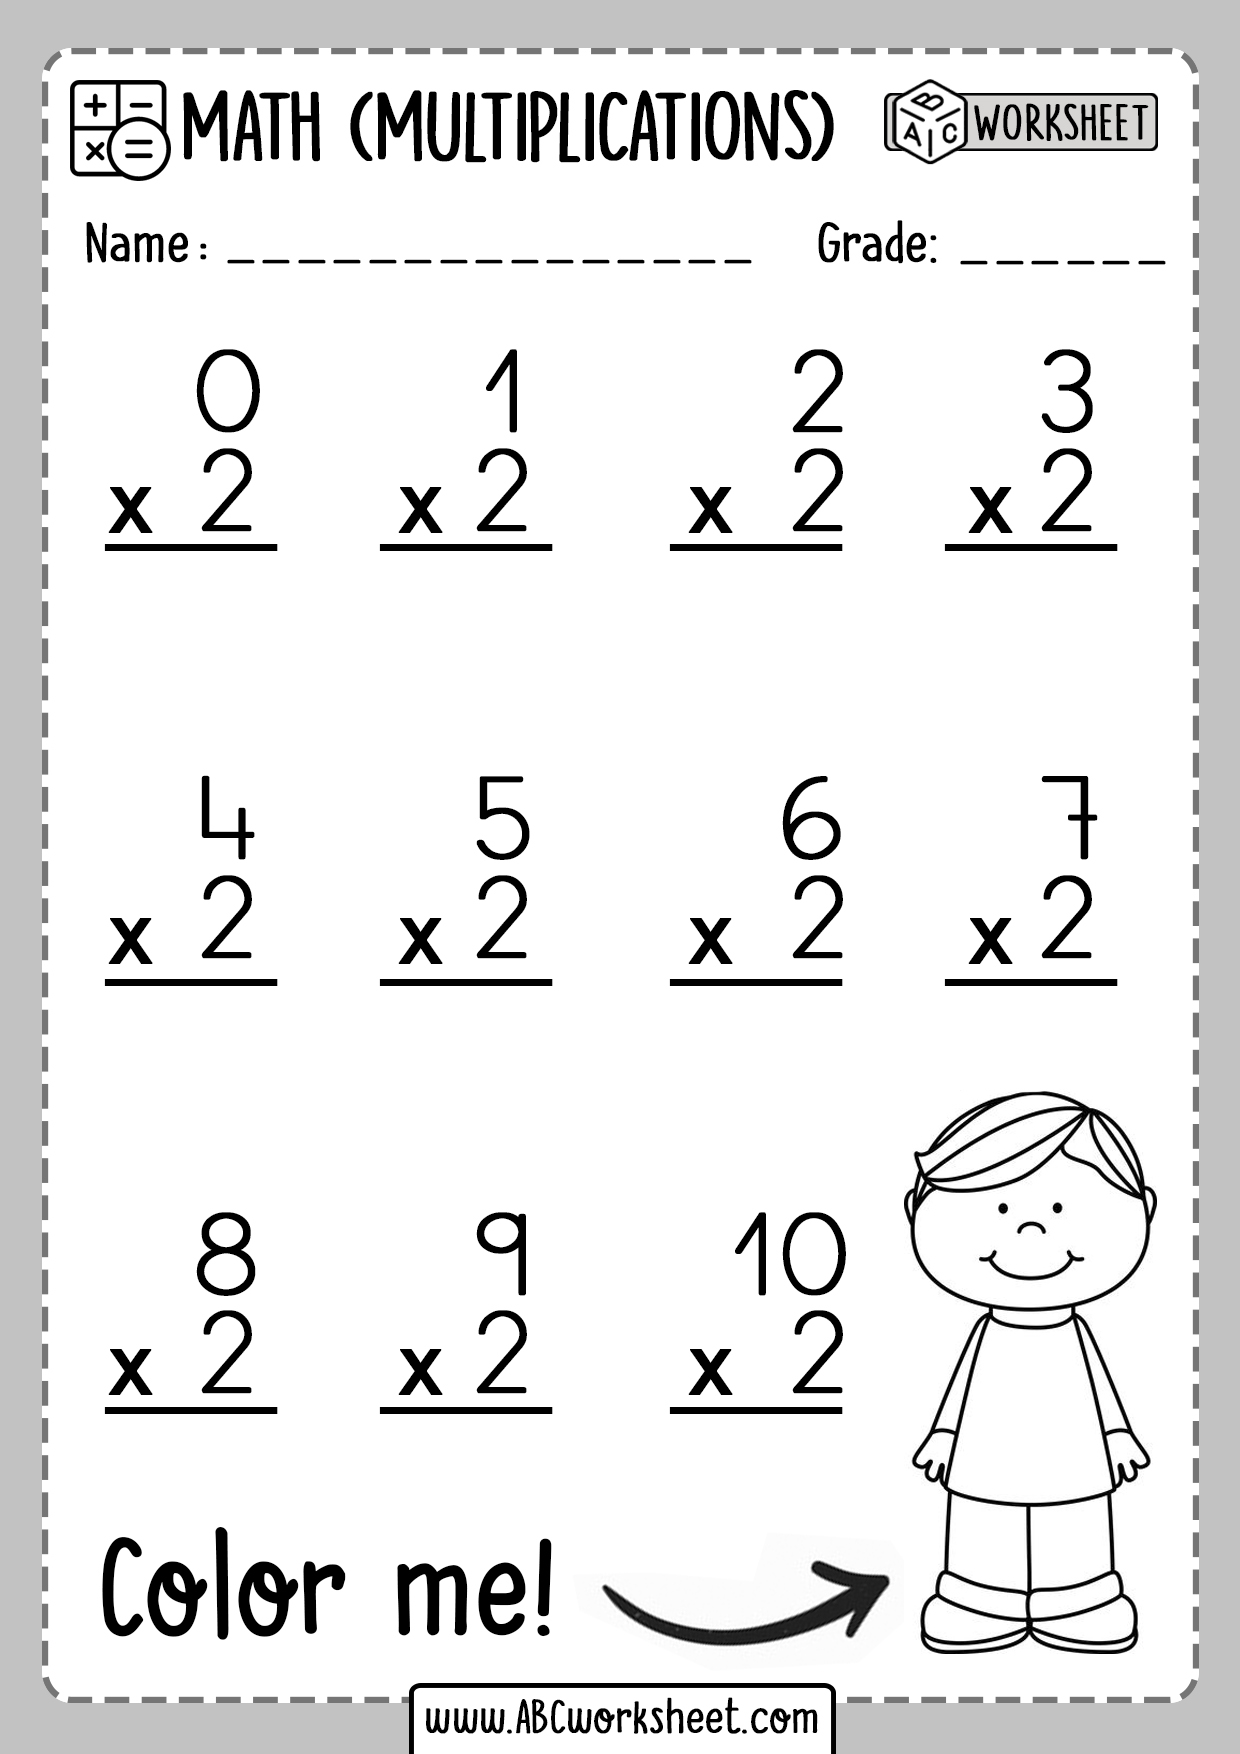 multiplication-table-printables-worksheets-d06